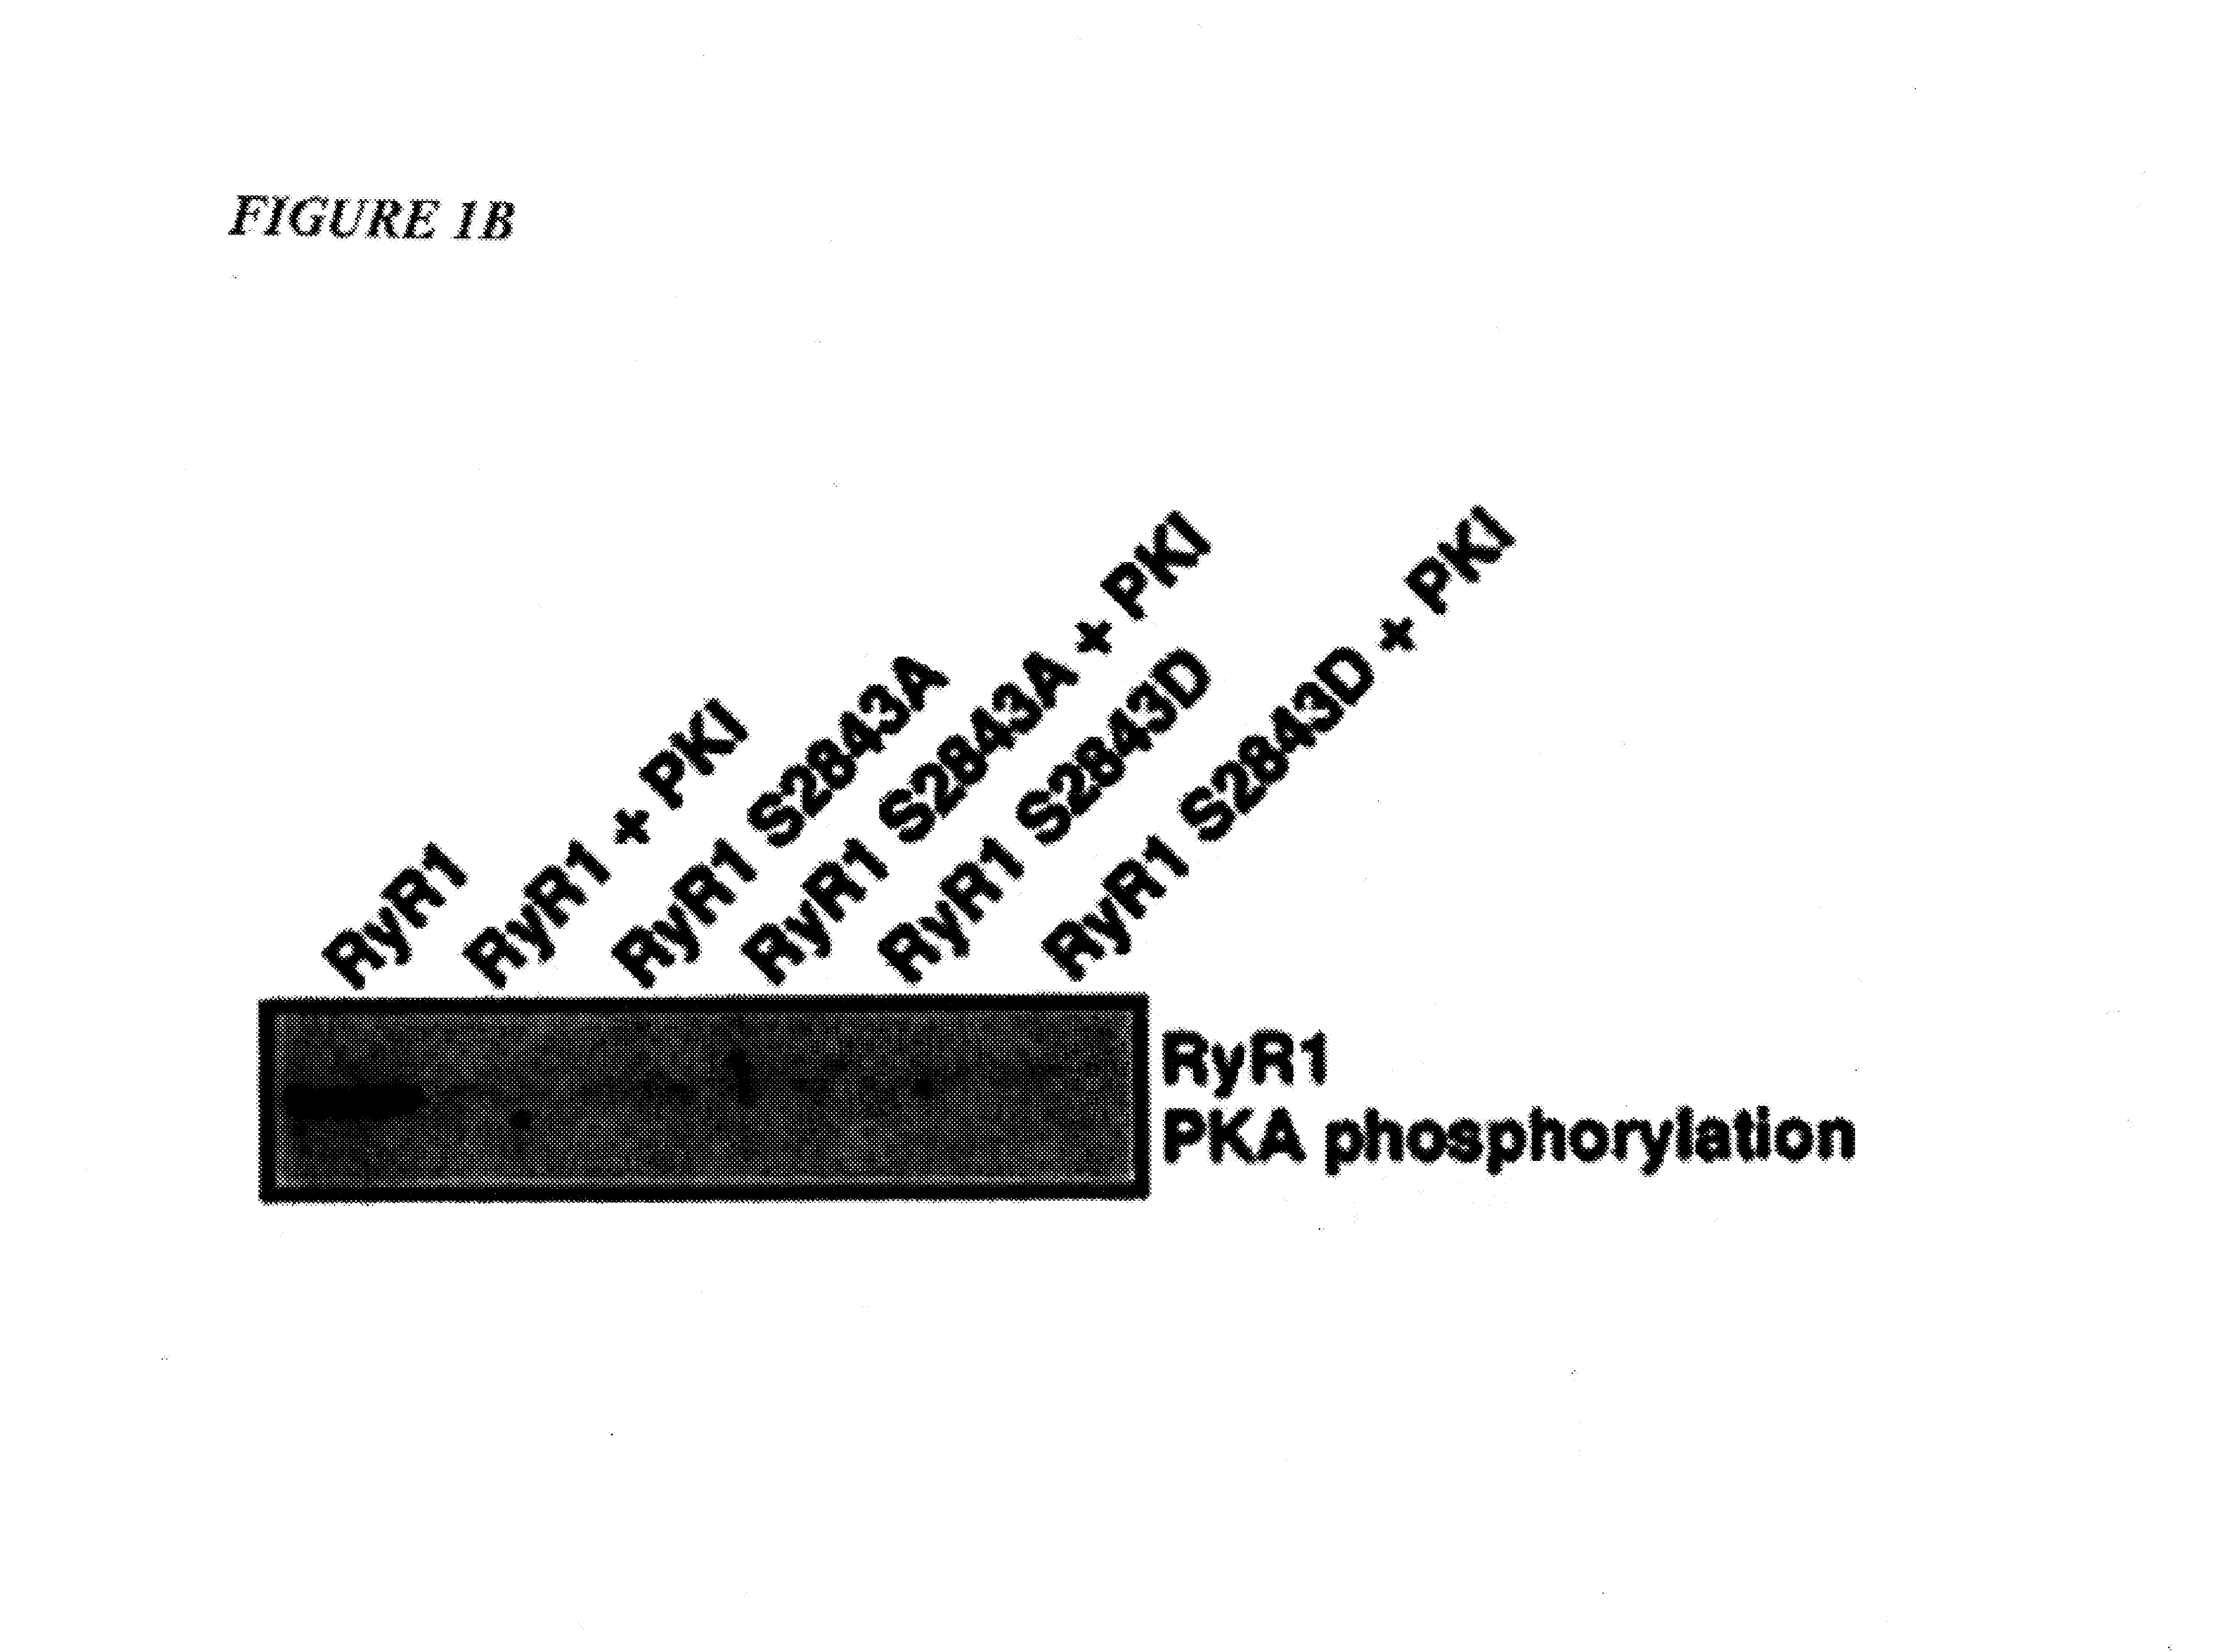 Type 1 ryanodine receptor-based methods